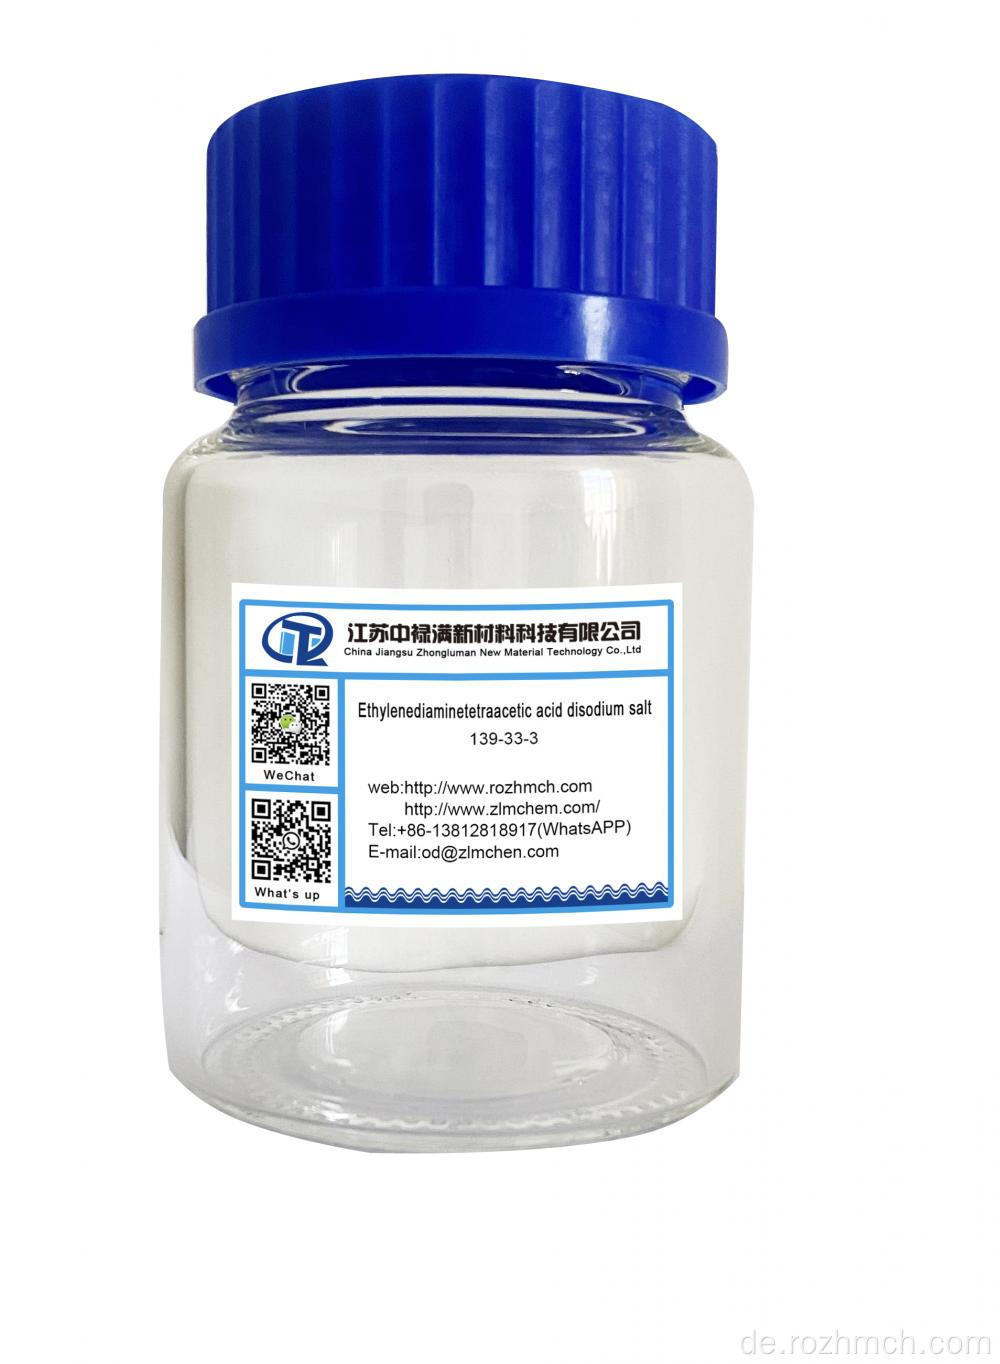 Ethylendiaminetetraessigsäure -Dissodiumsalz